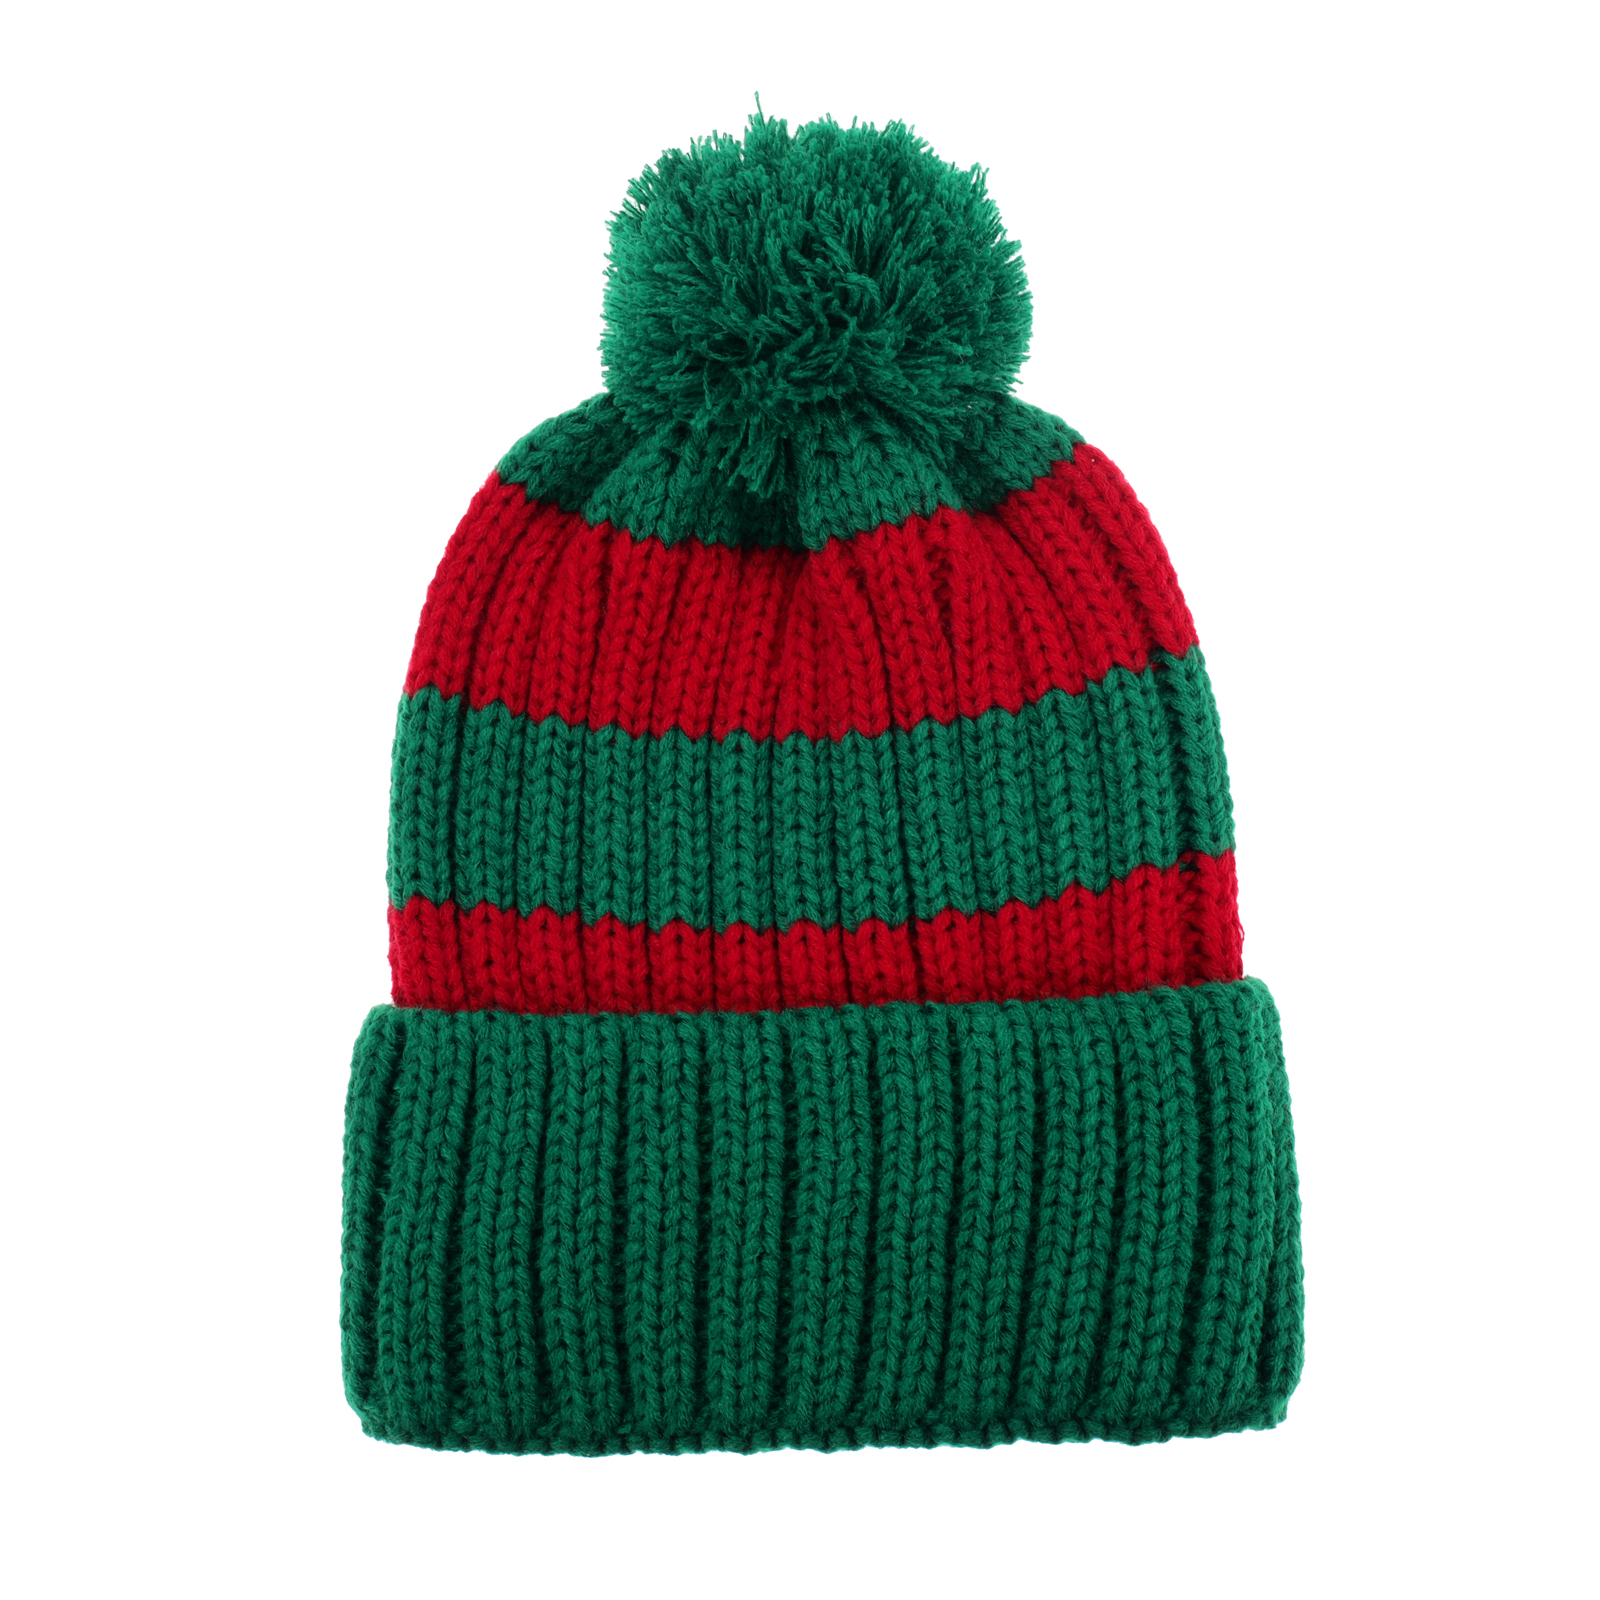 Coarse knit green/red striped